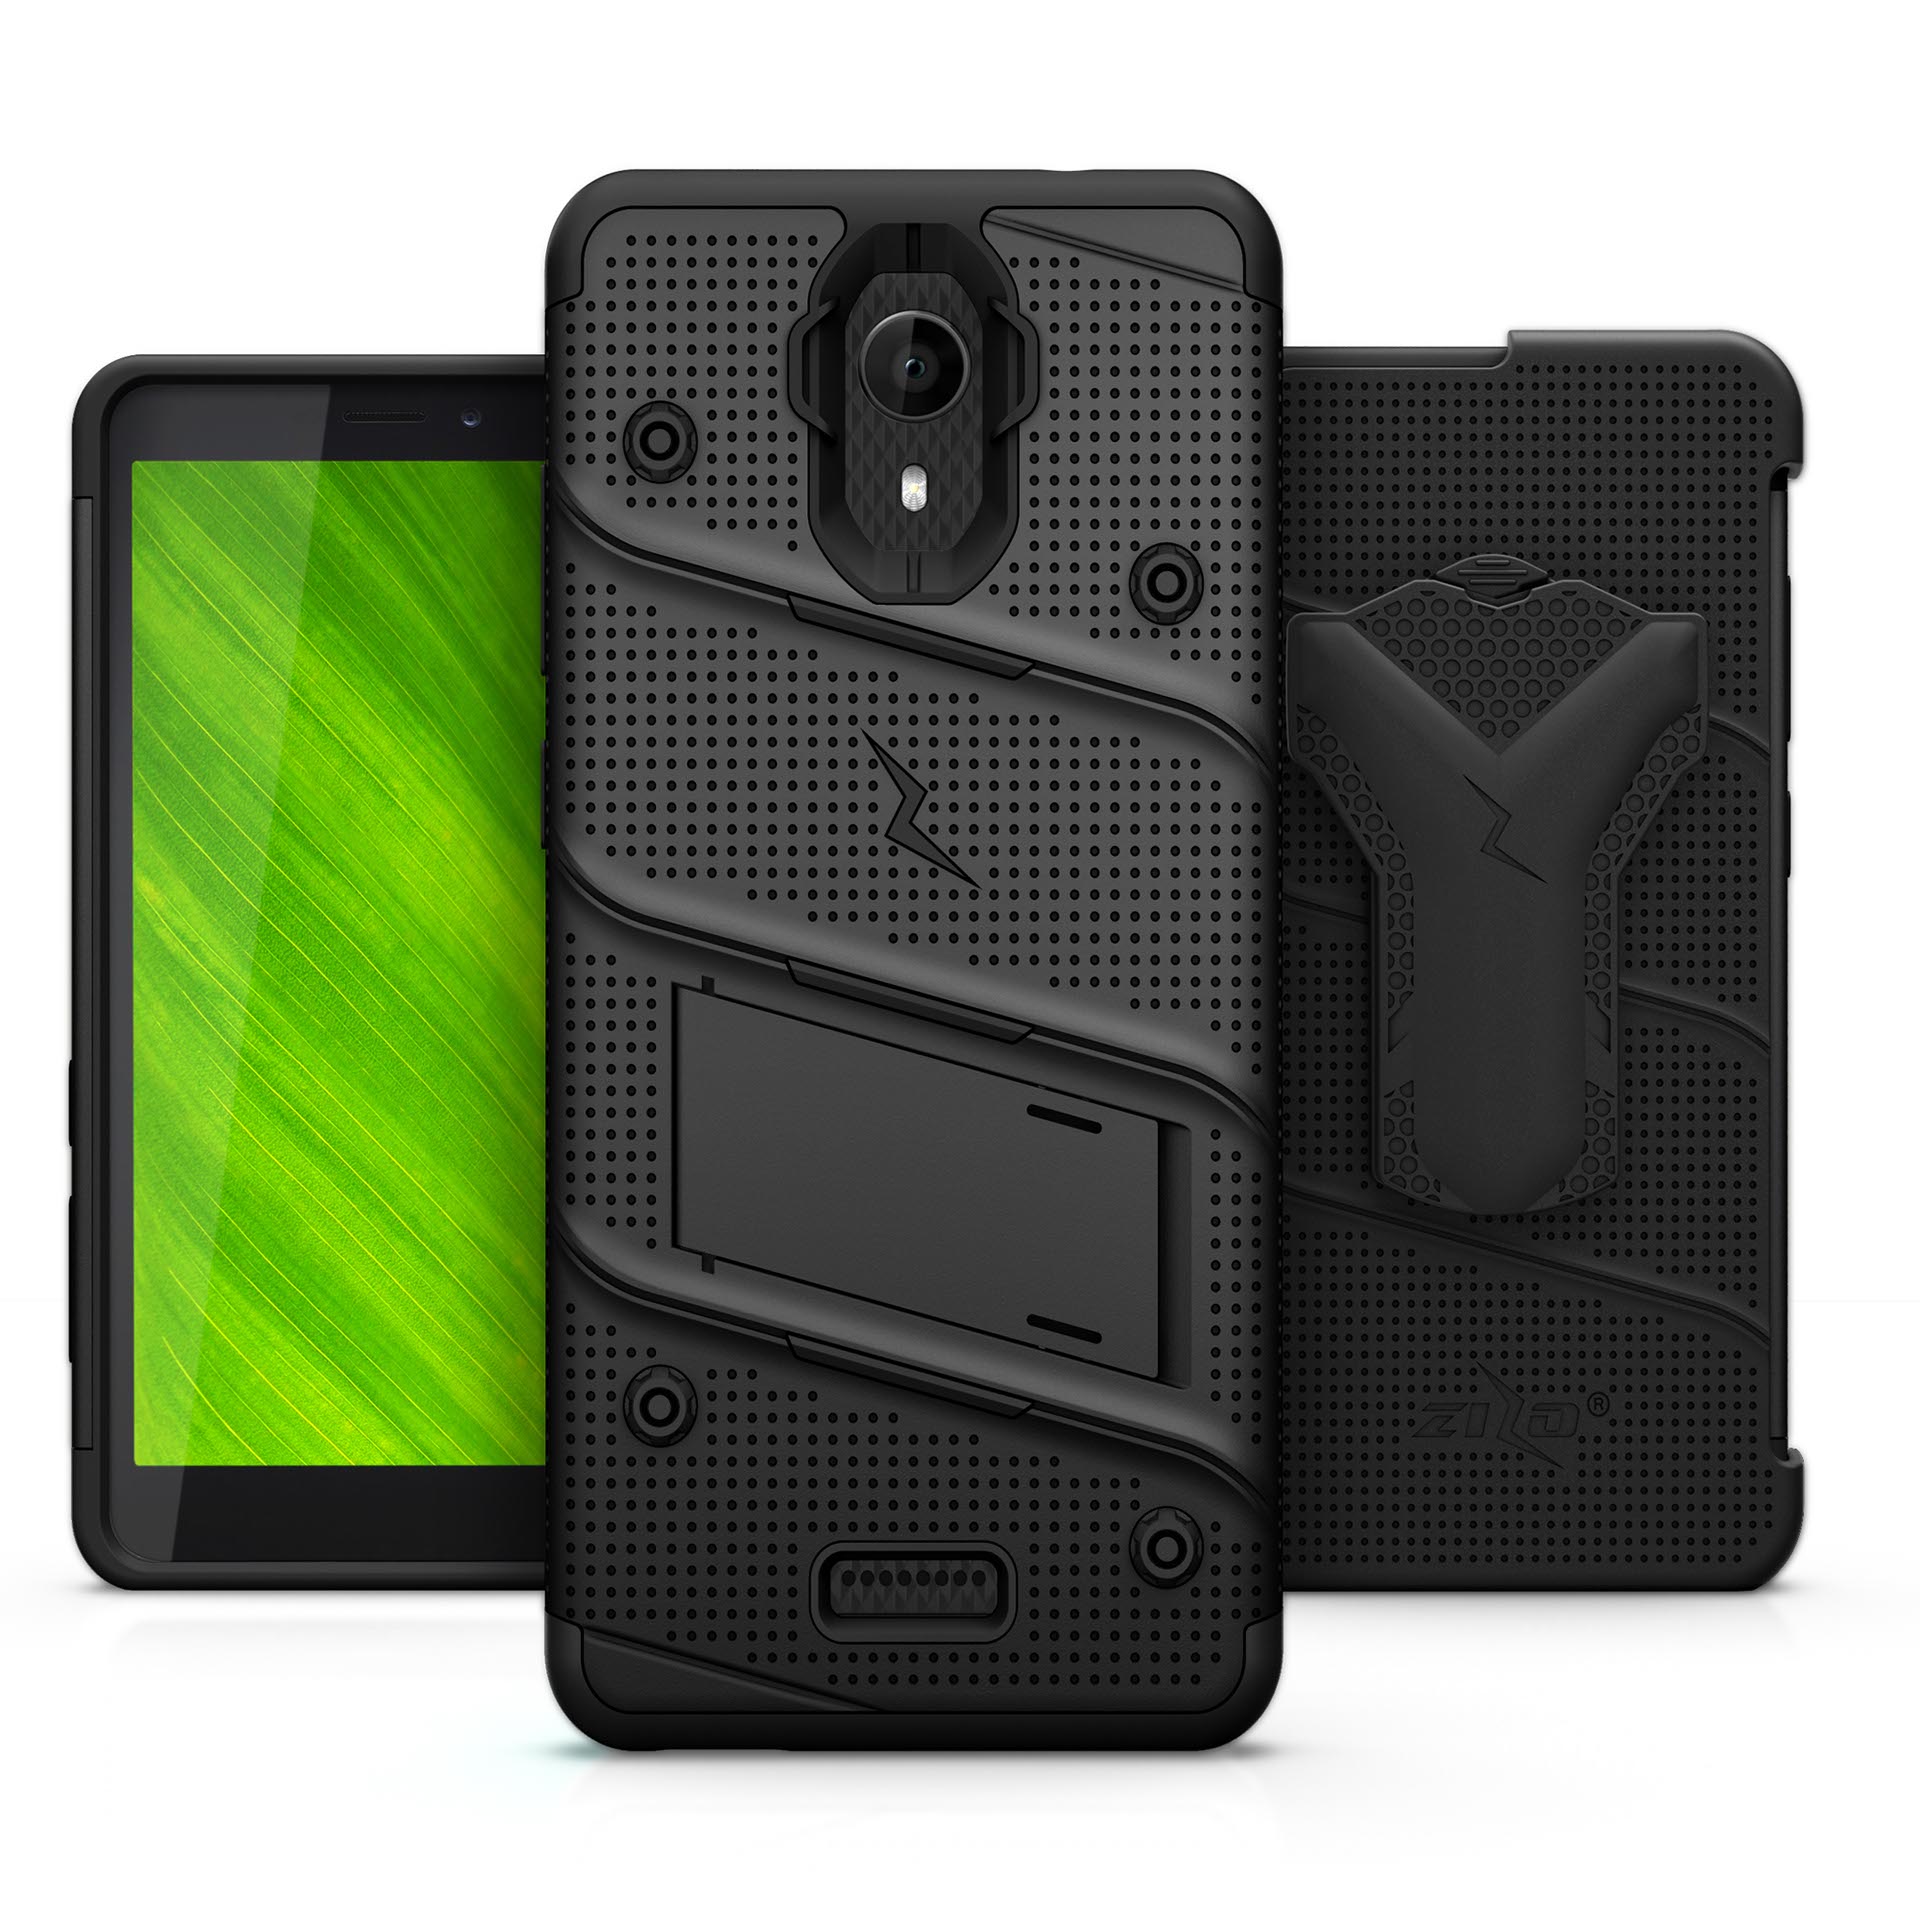 Cricket Icon Smartphone: Zizo BOLT Case with Tempered Glass: Gun Metal Black/Black (9697)